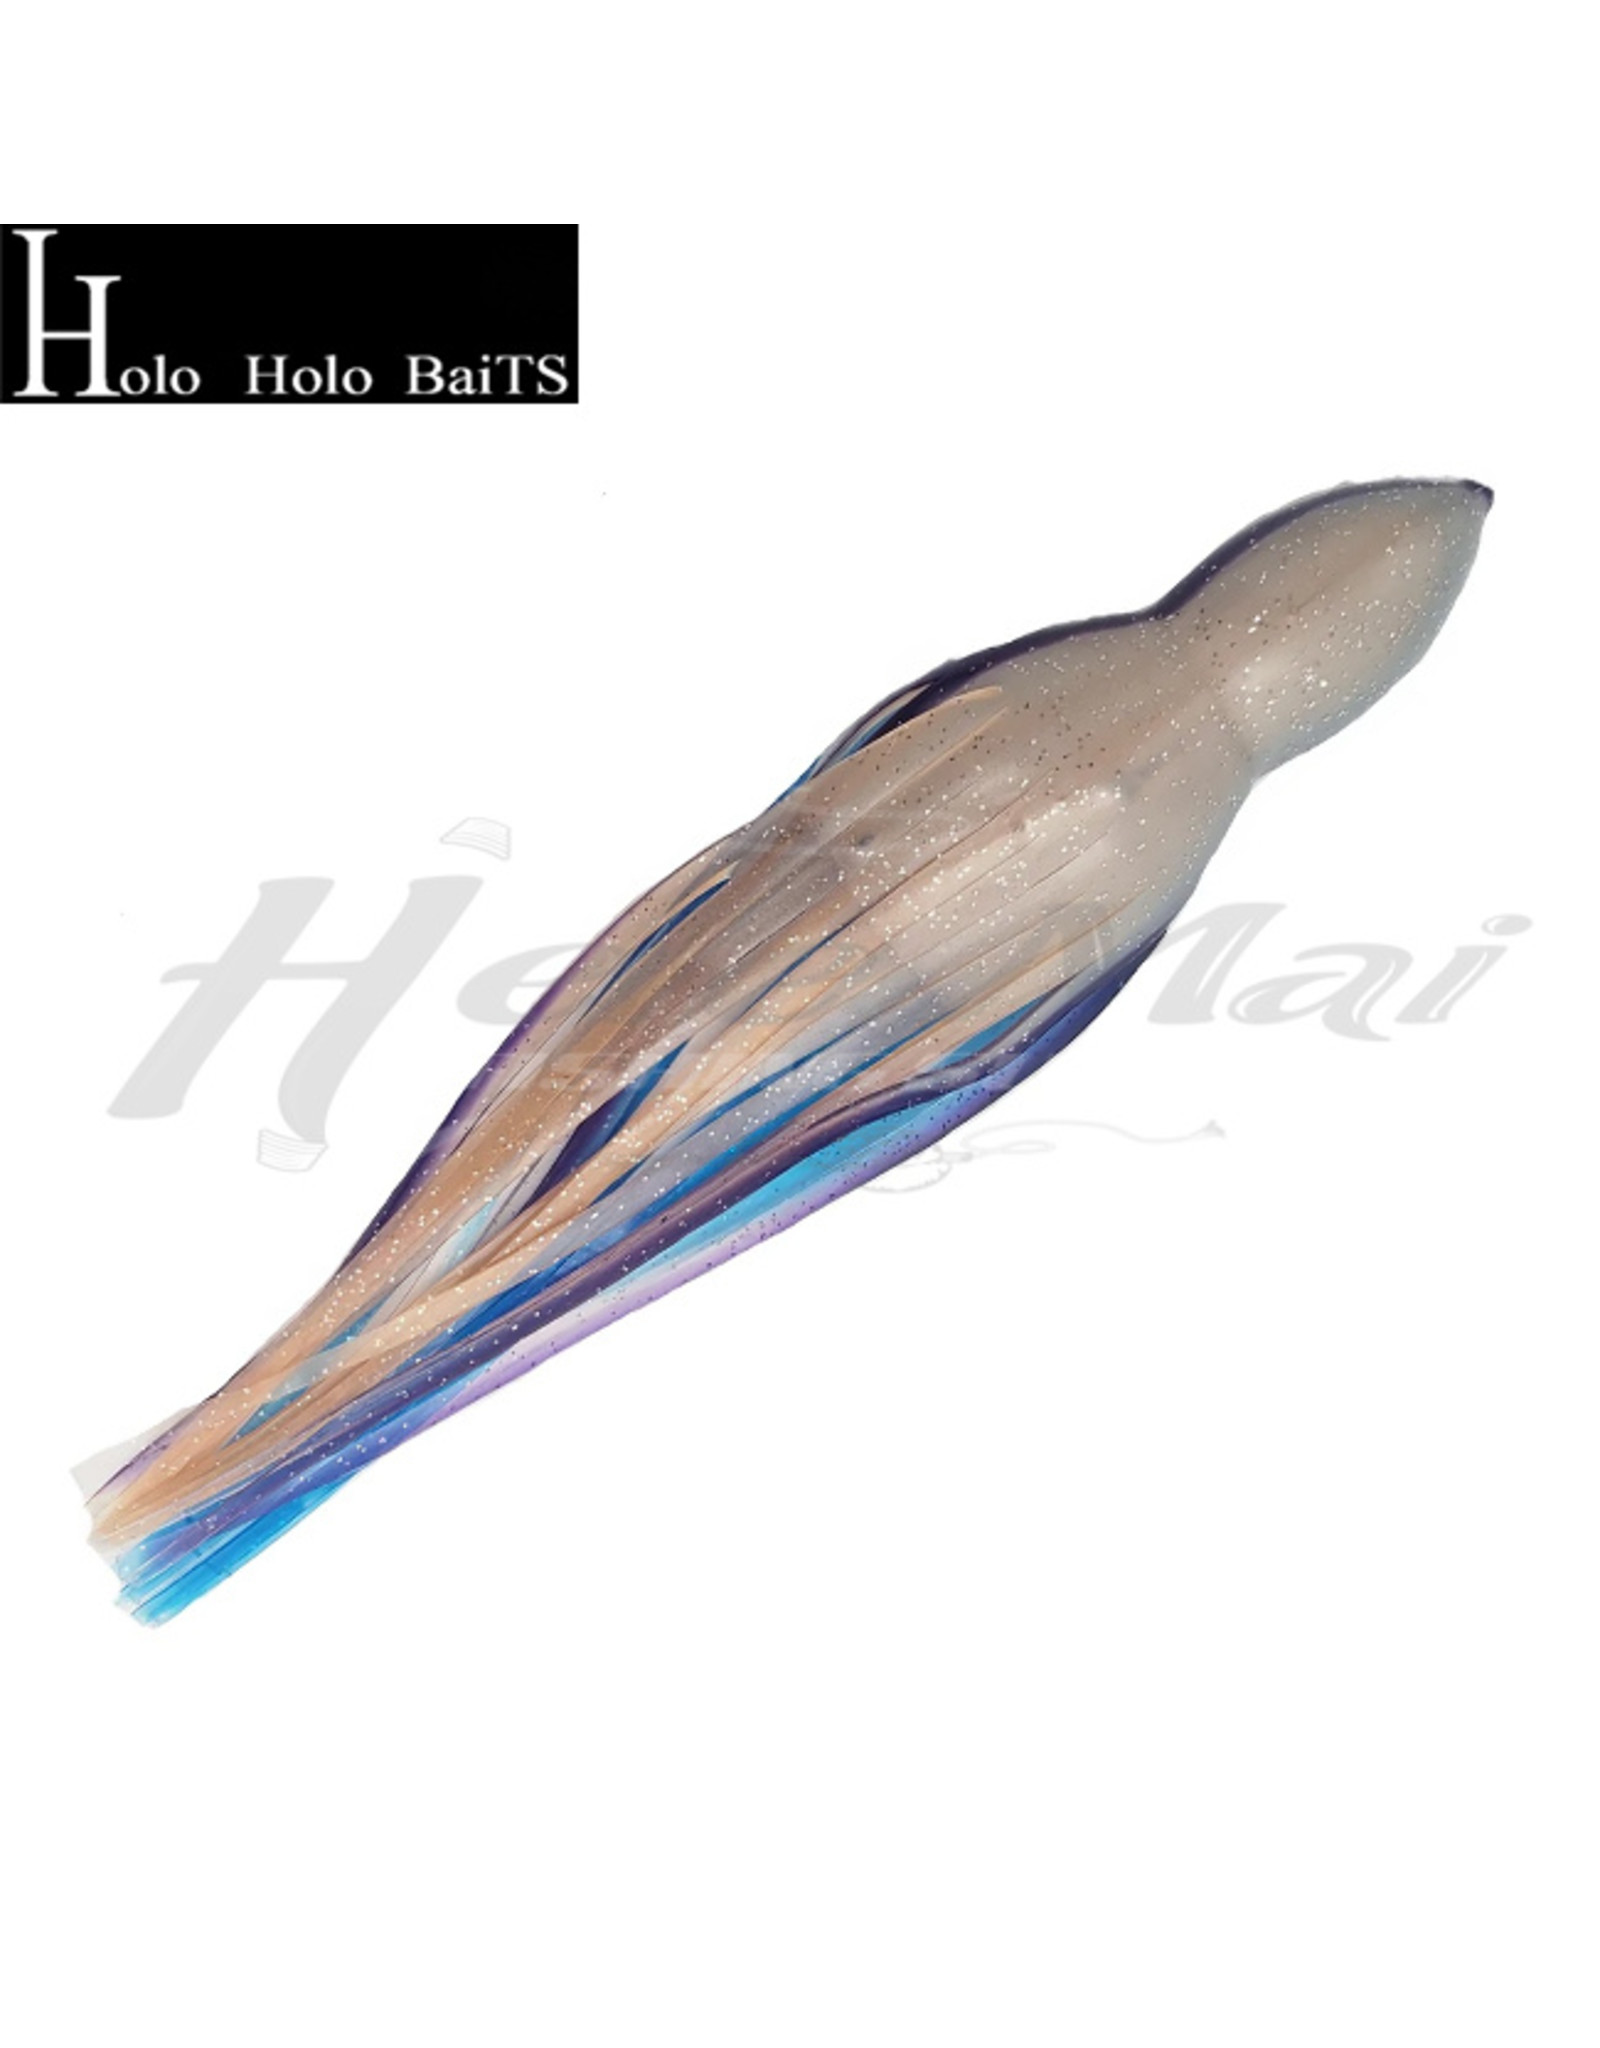 HOLO HOLO HAWAII (HHH) HH, 9" SQUID SKIRT BLUE SALMON PURPLE GLITTER SM1-6B